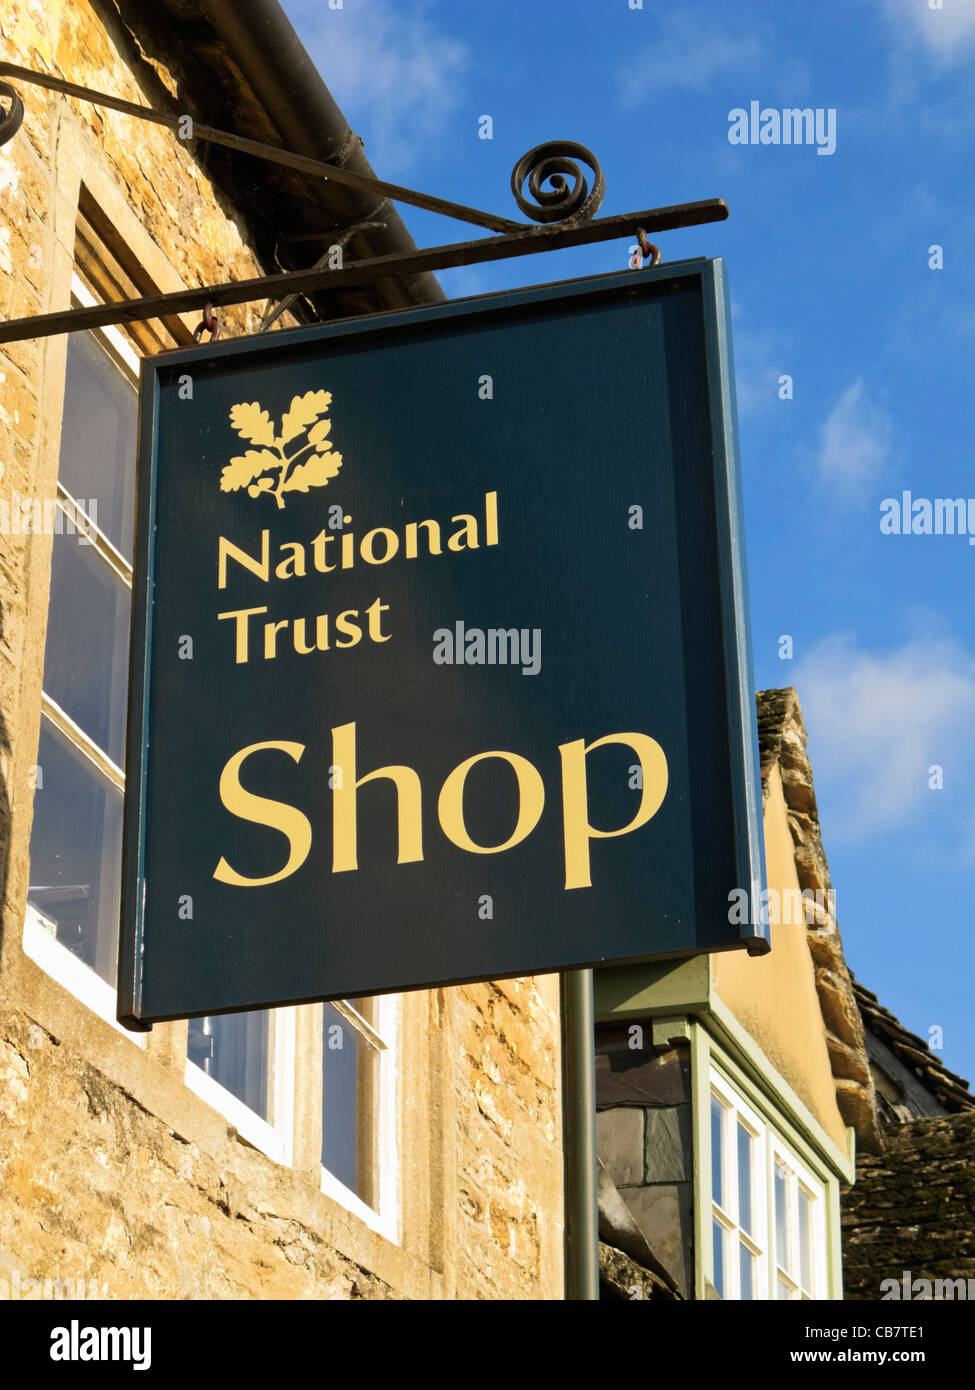 National Trust sign with logo - England, UK Stock Photo